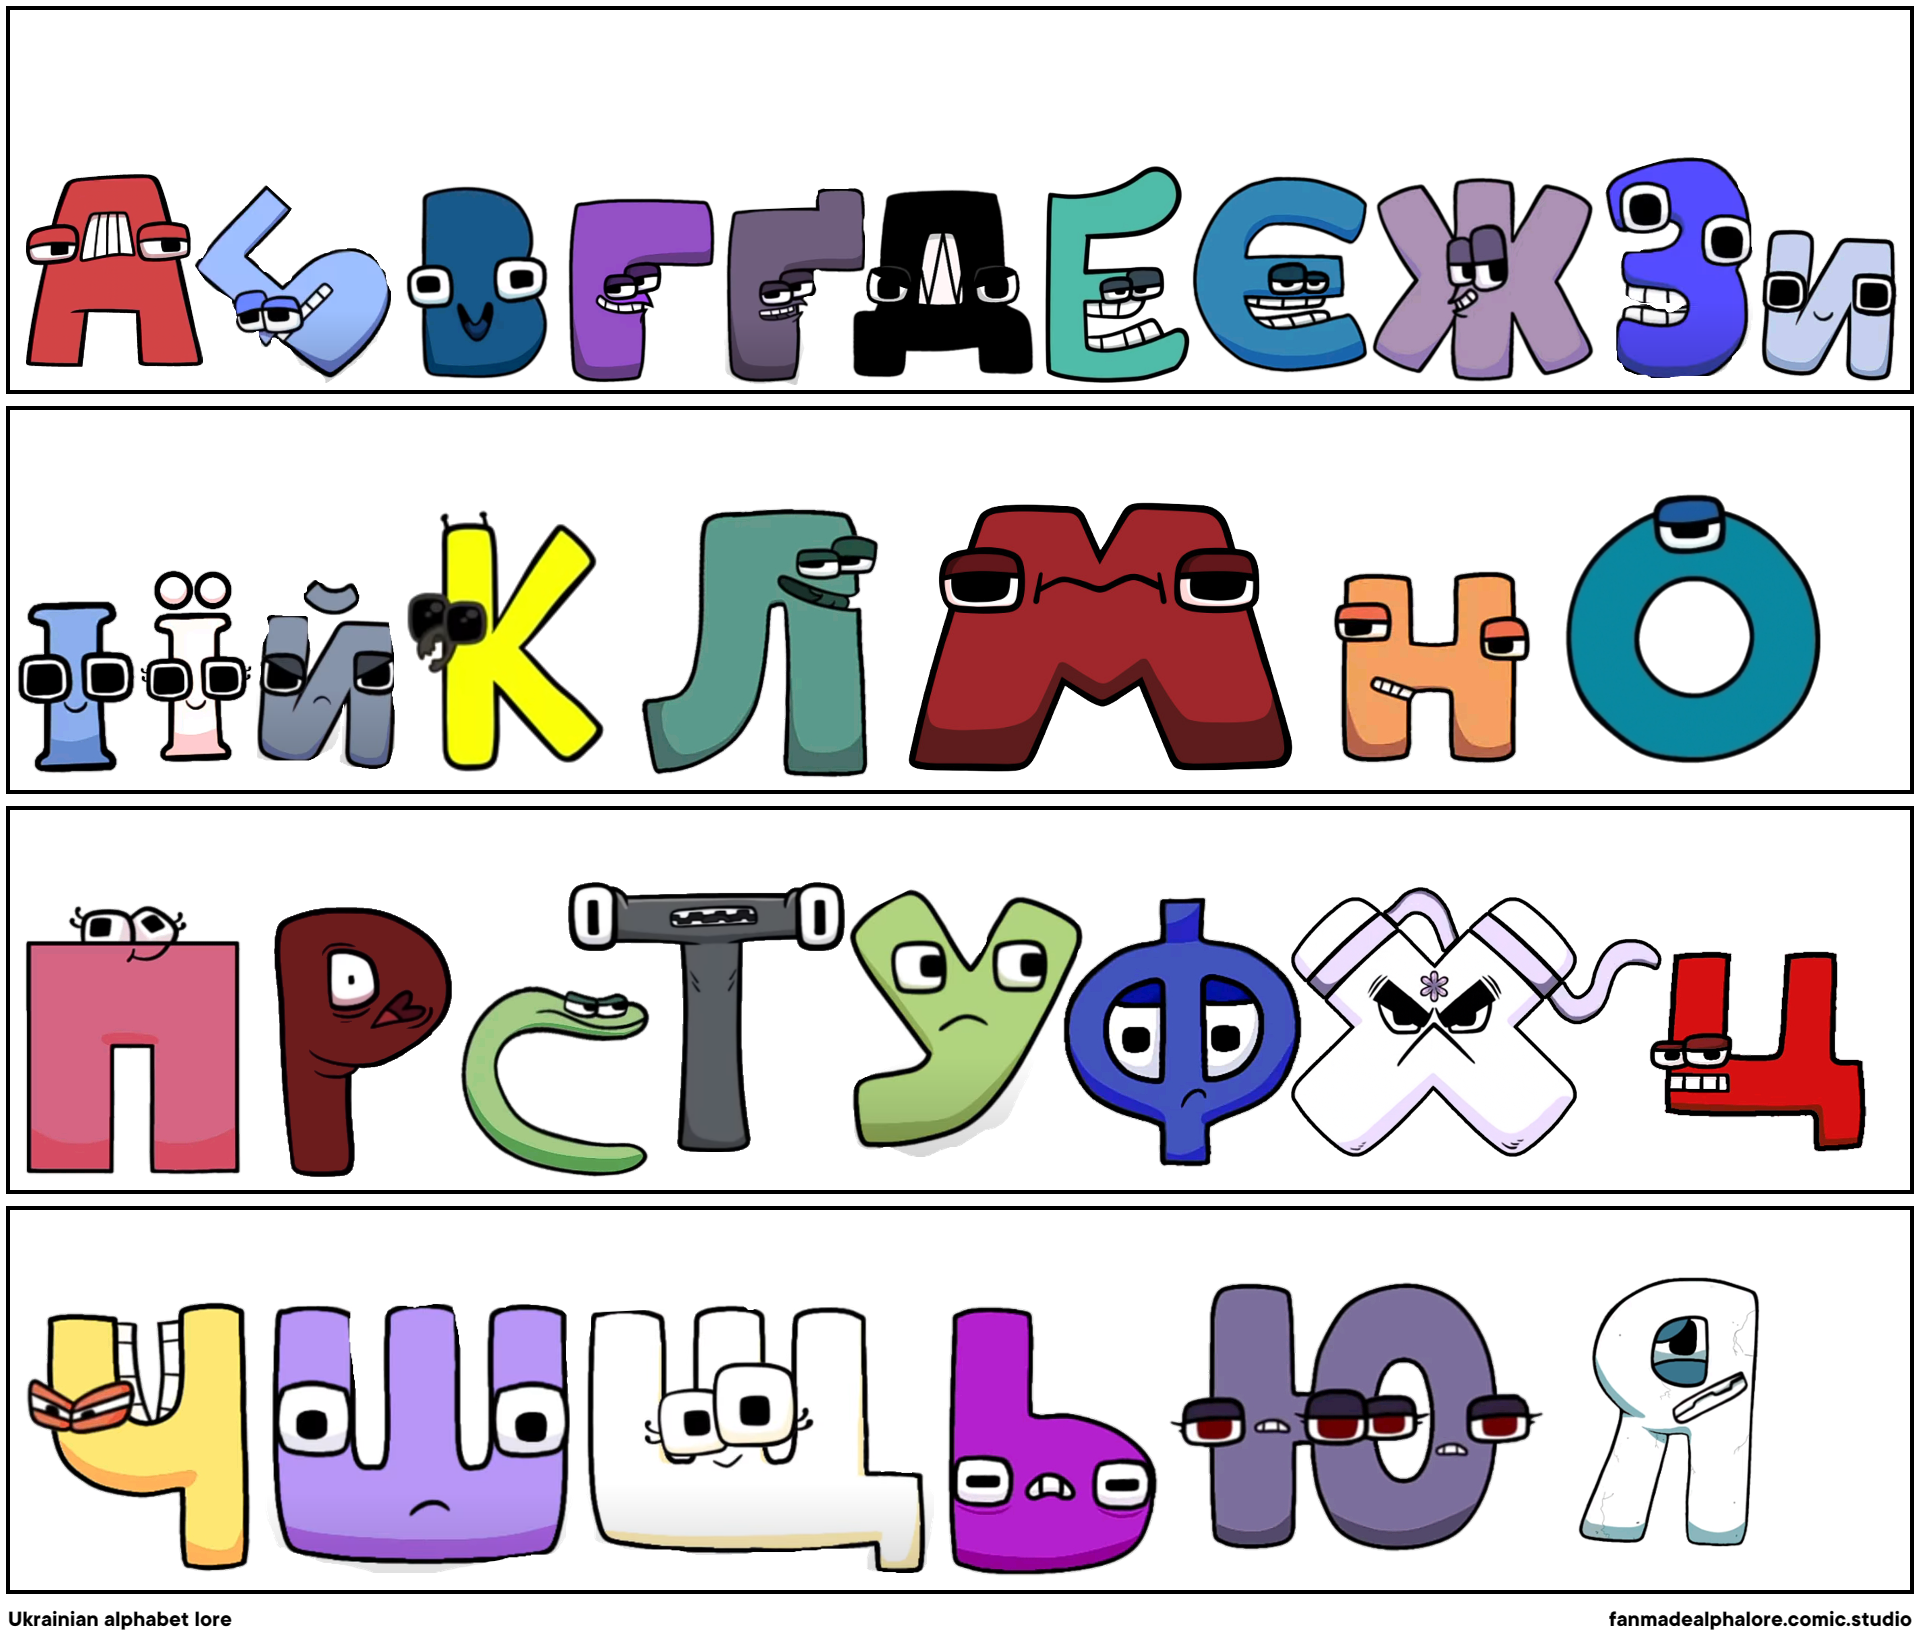 Ukraine Alphabet Lore (A - Я) 